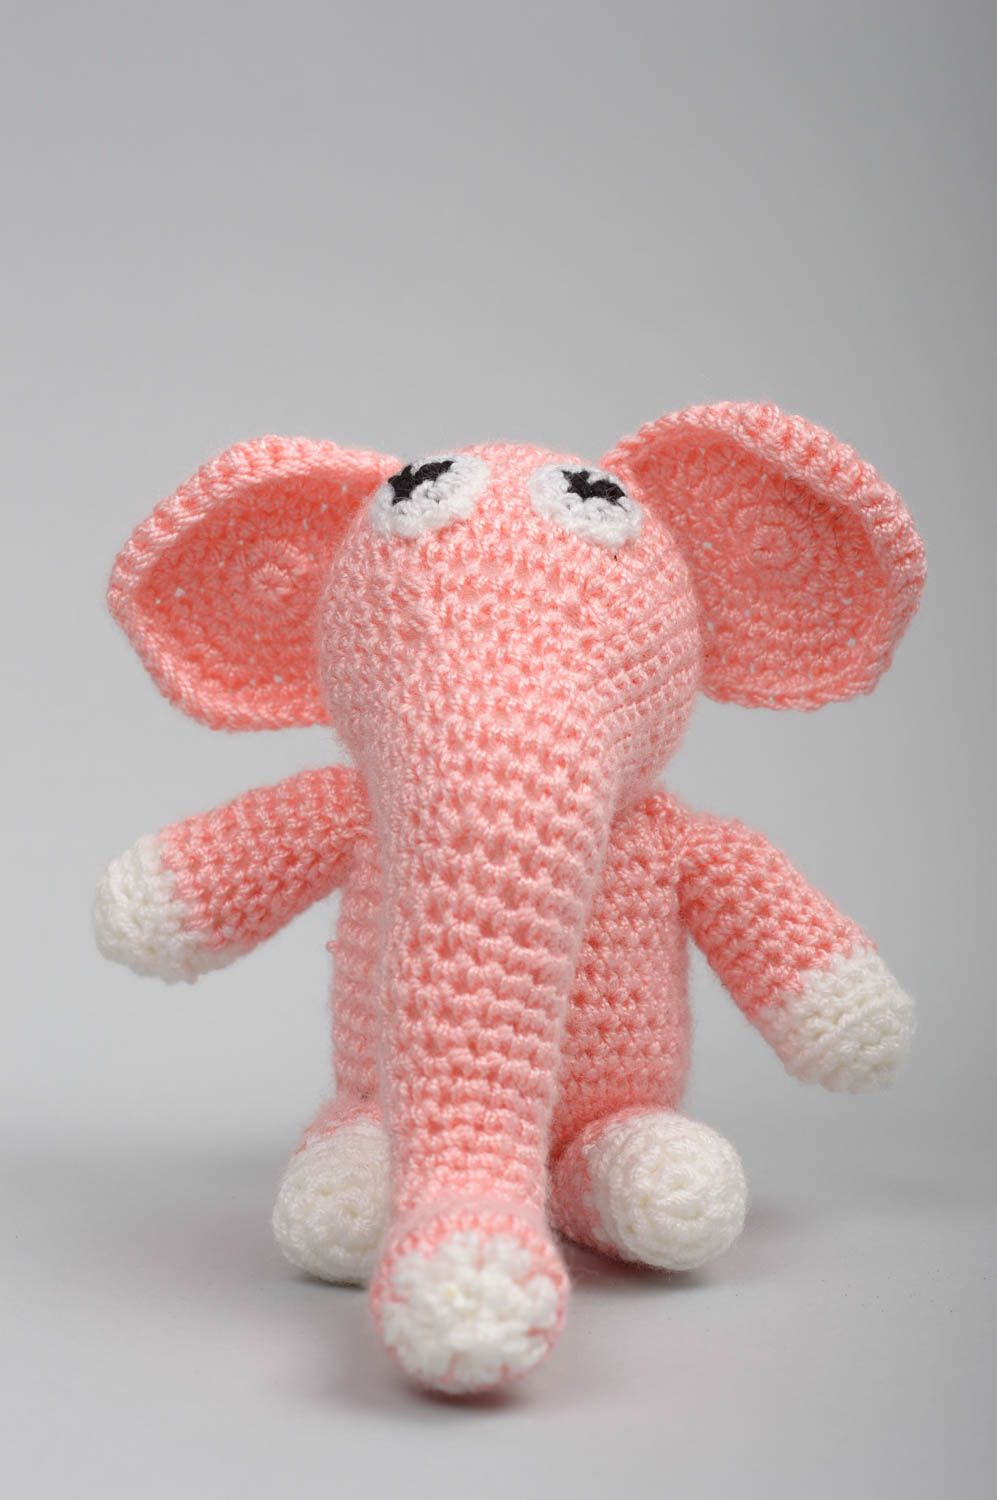 Handmade toy crochet stuffed animals toys for kids nursery decor gifts for kids photo 1